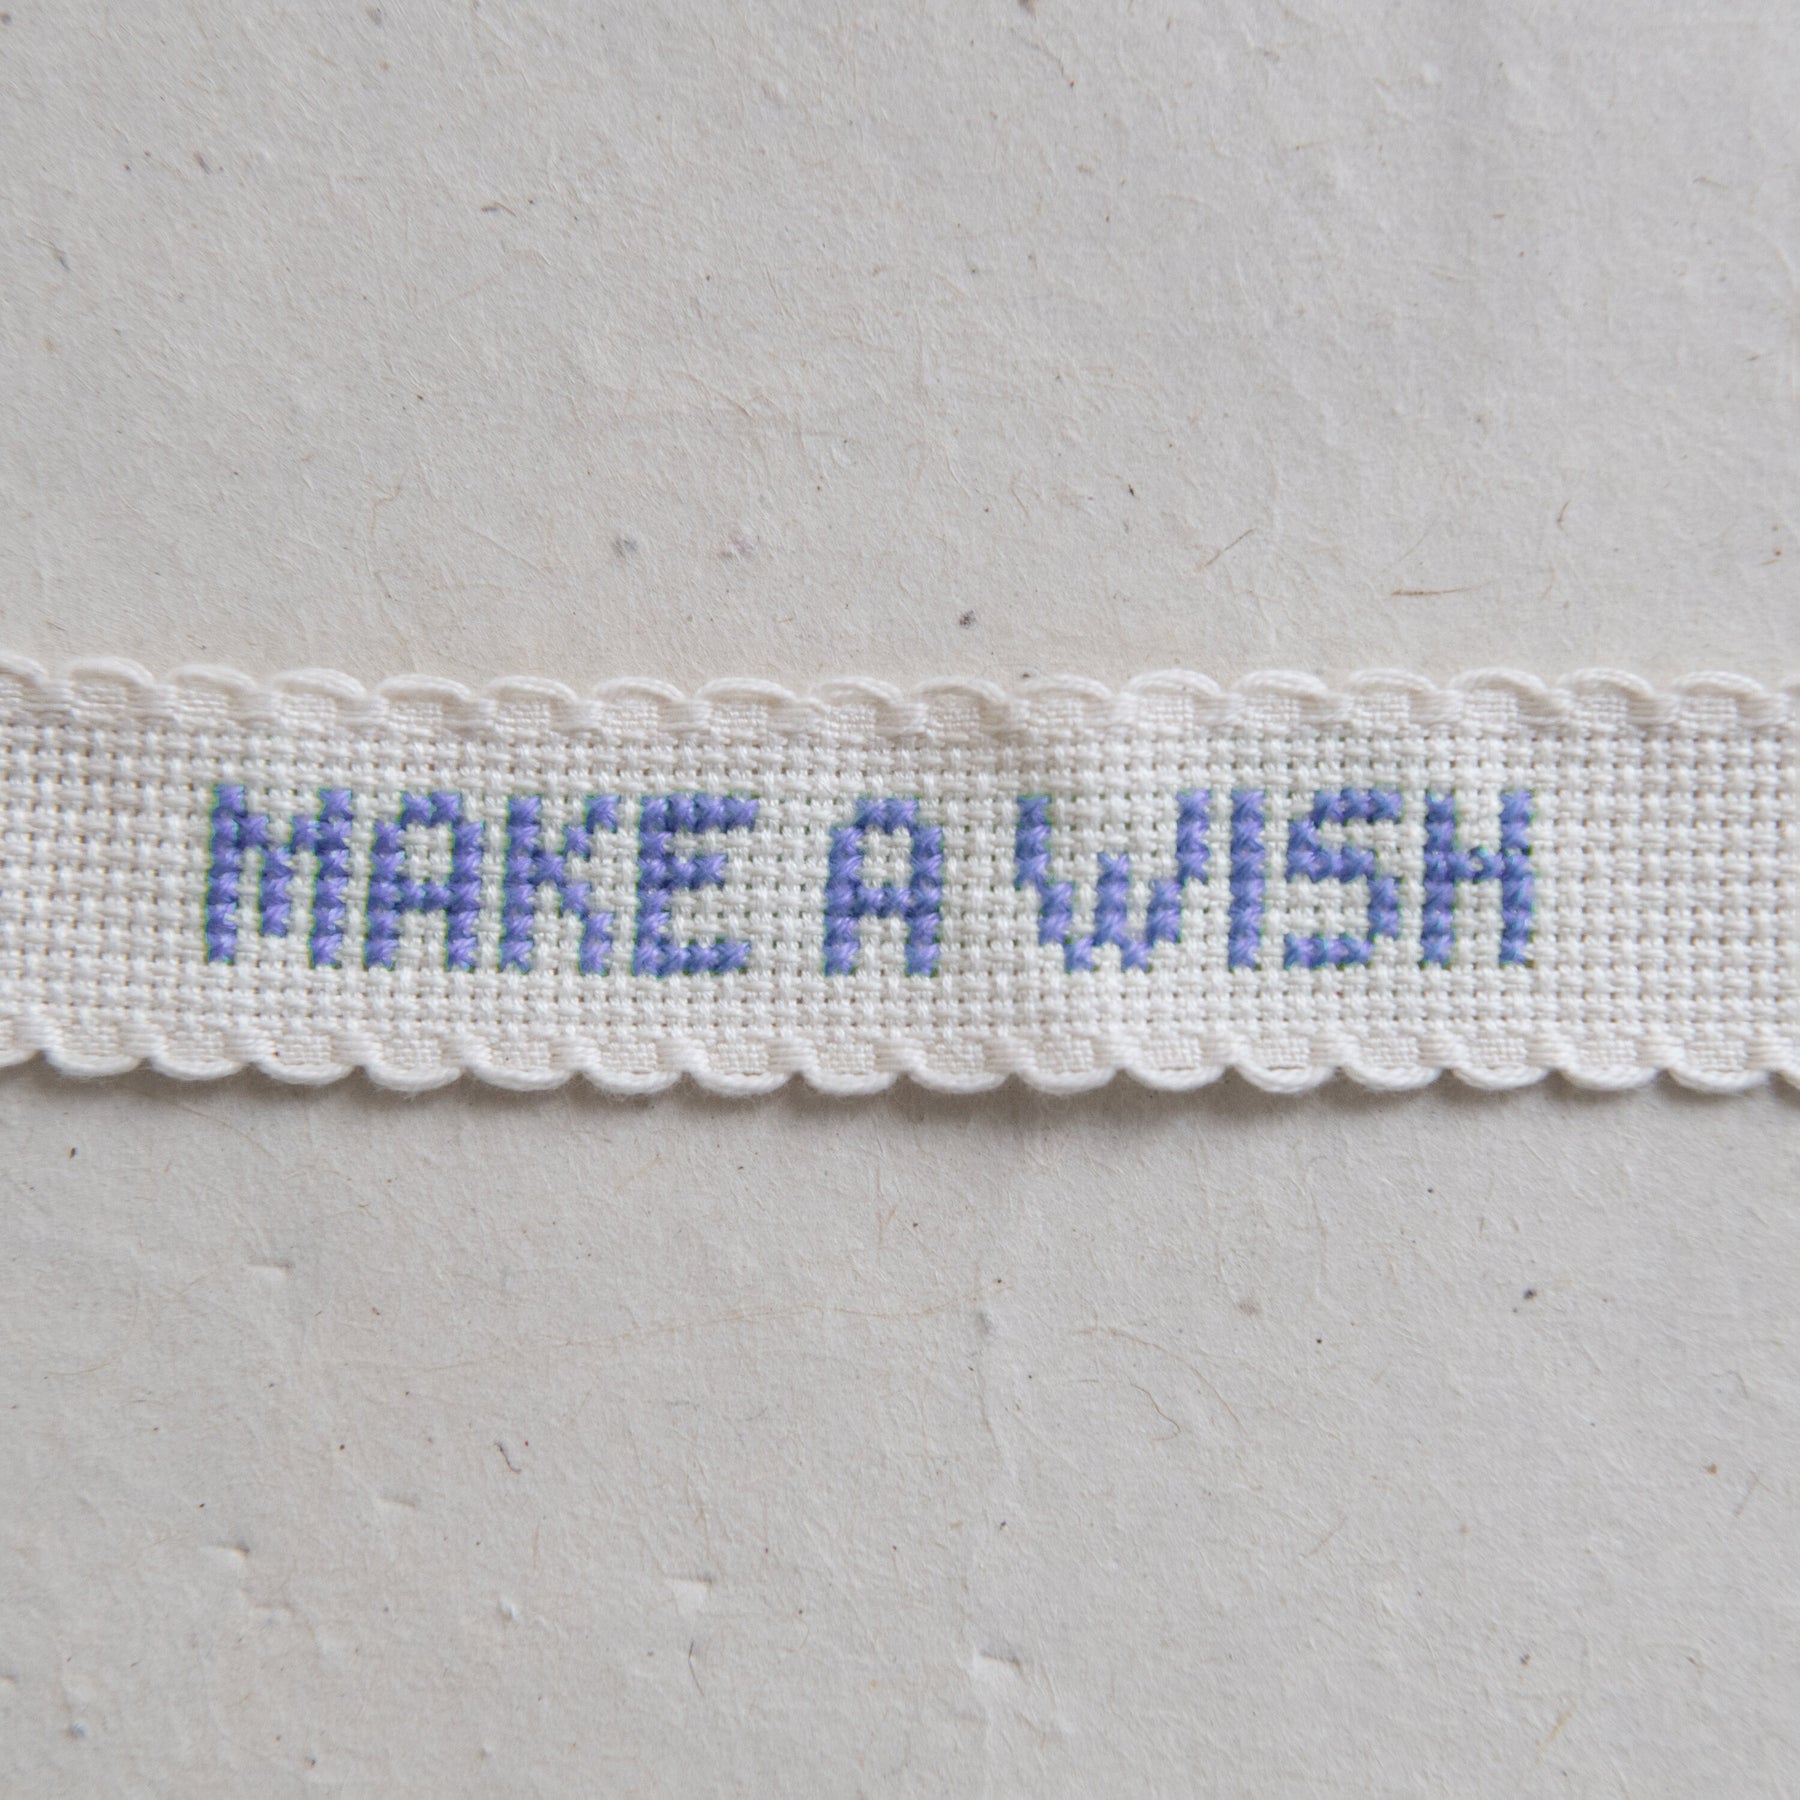 Just To Say 'MAKE A WISH' Cross Stitch Secret Message